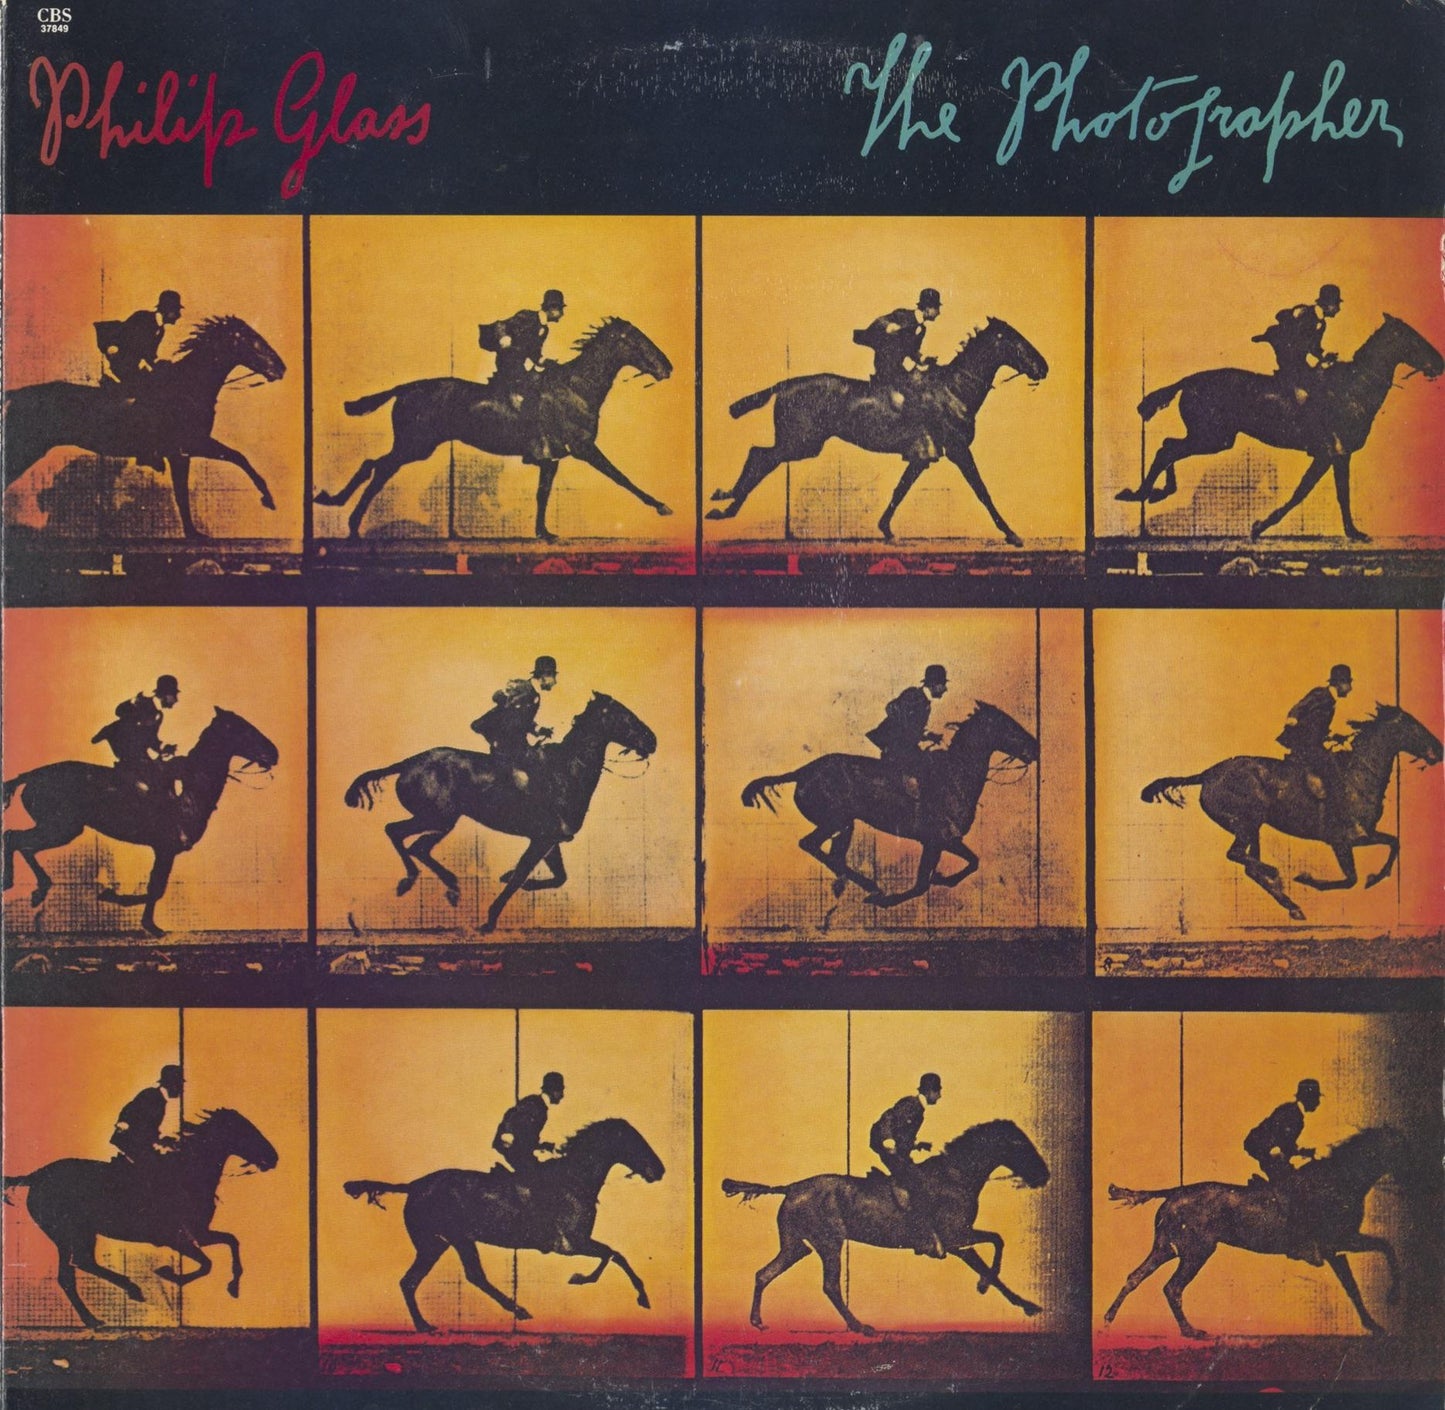 Philip Glass / The Photographer